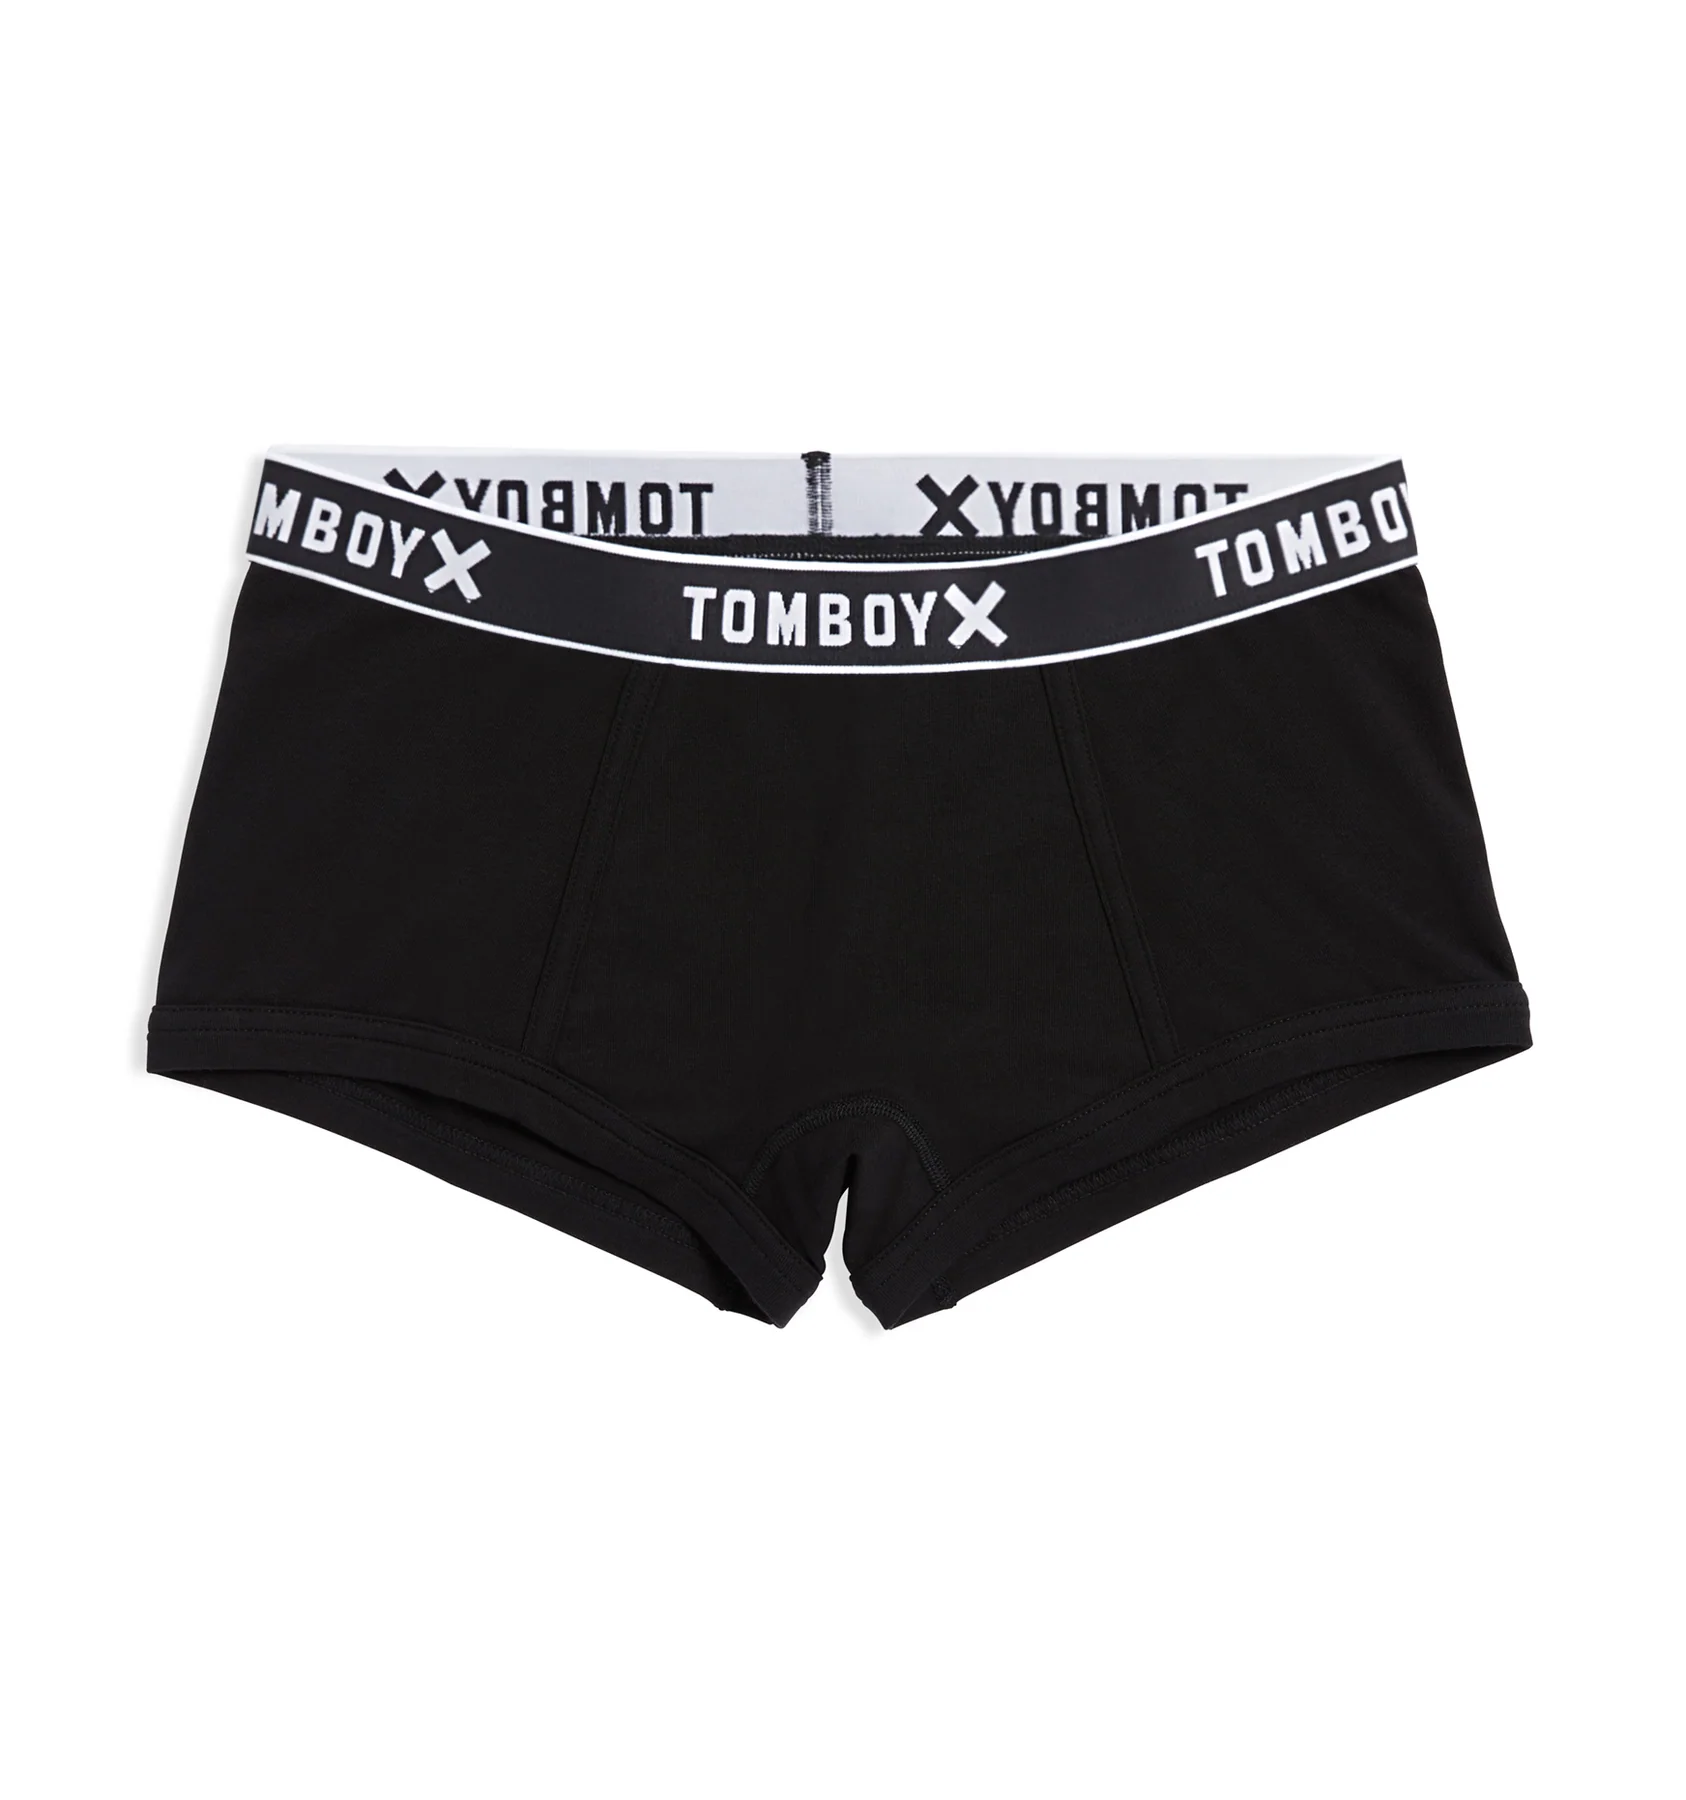 Iconic Boxer Briefs, X= Black – TomboyX